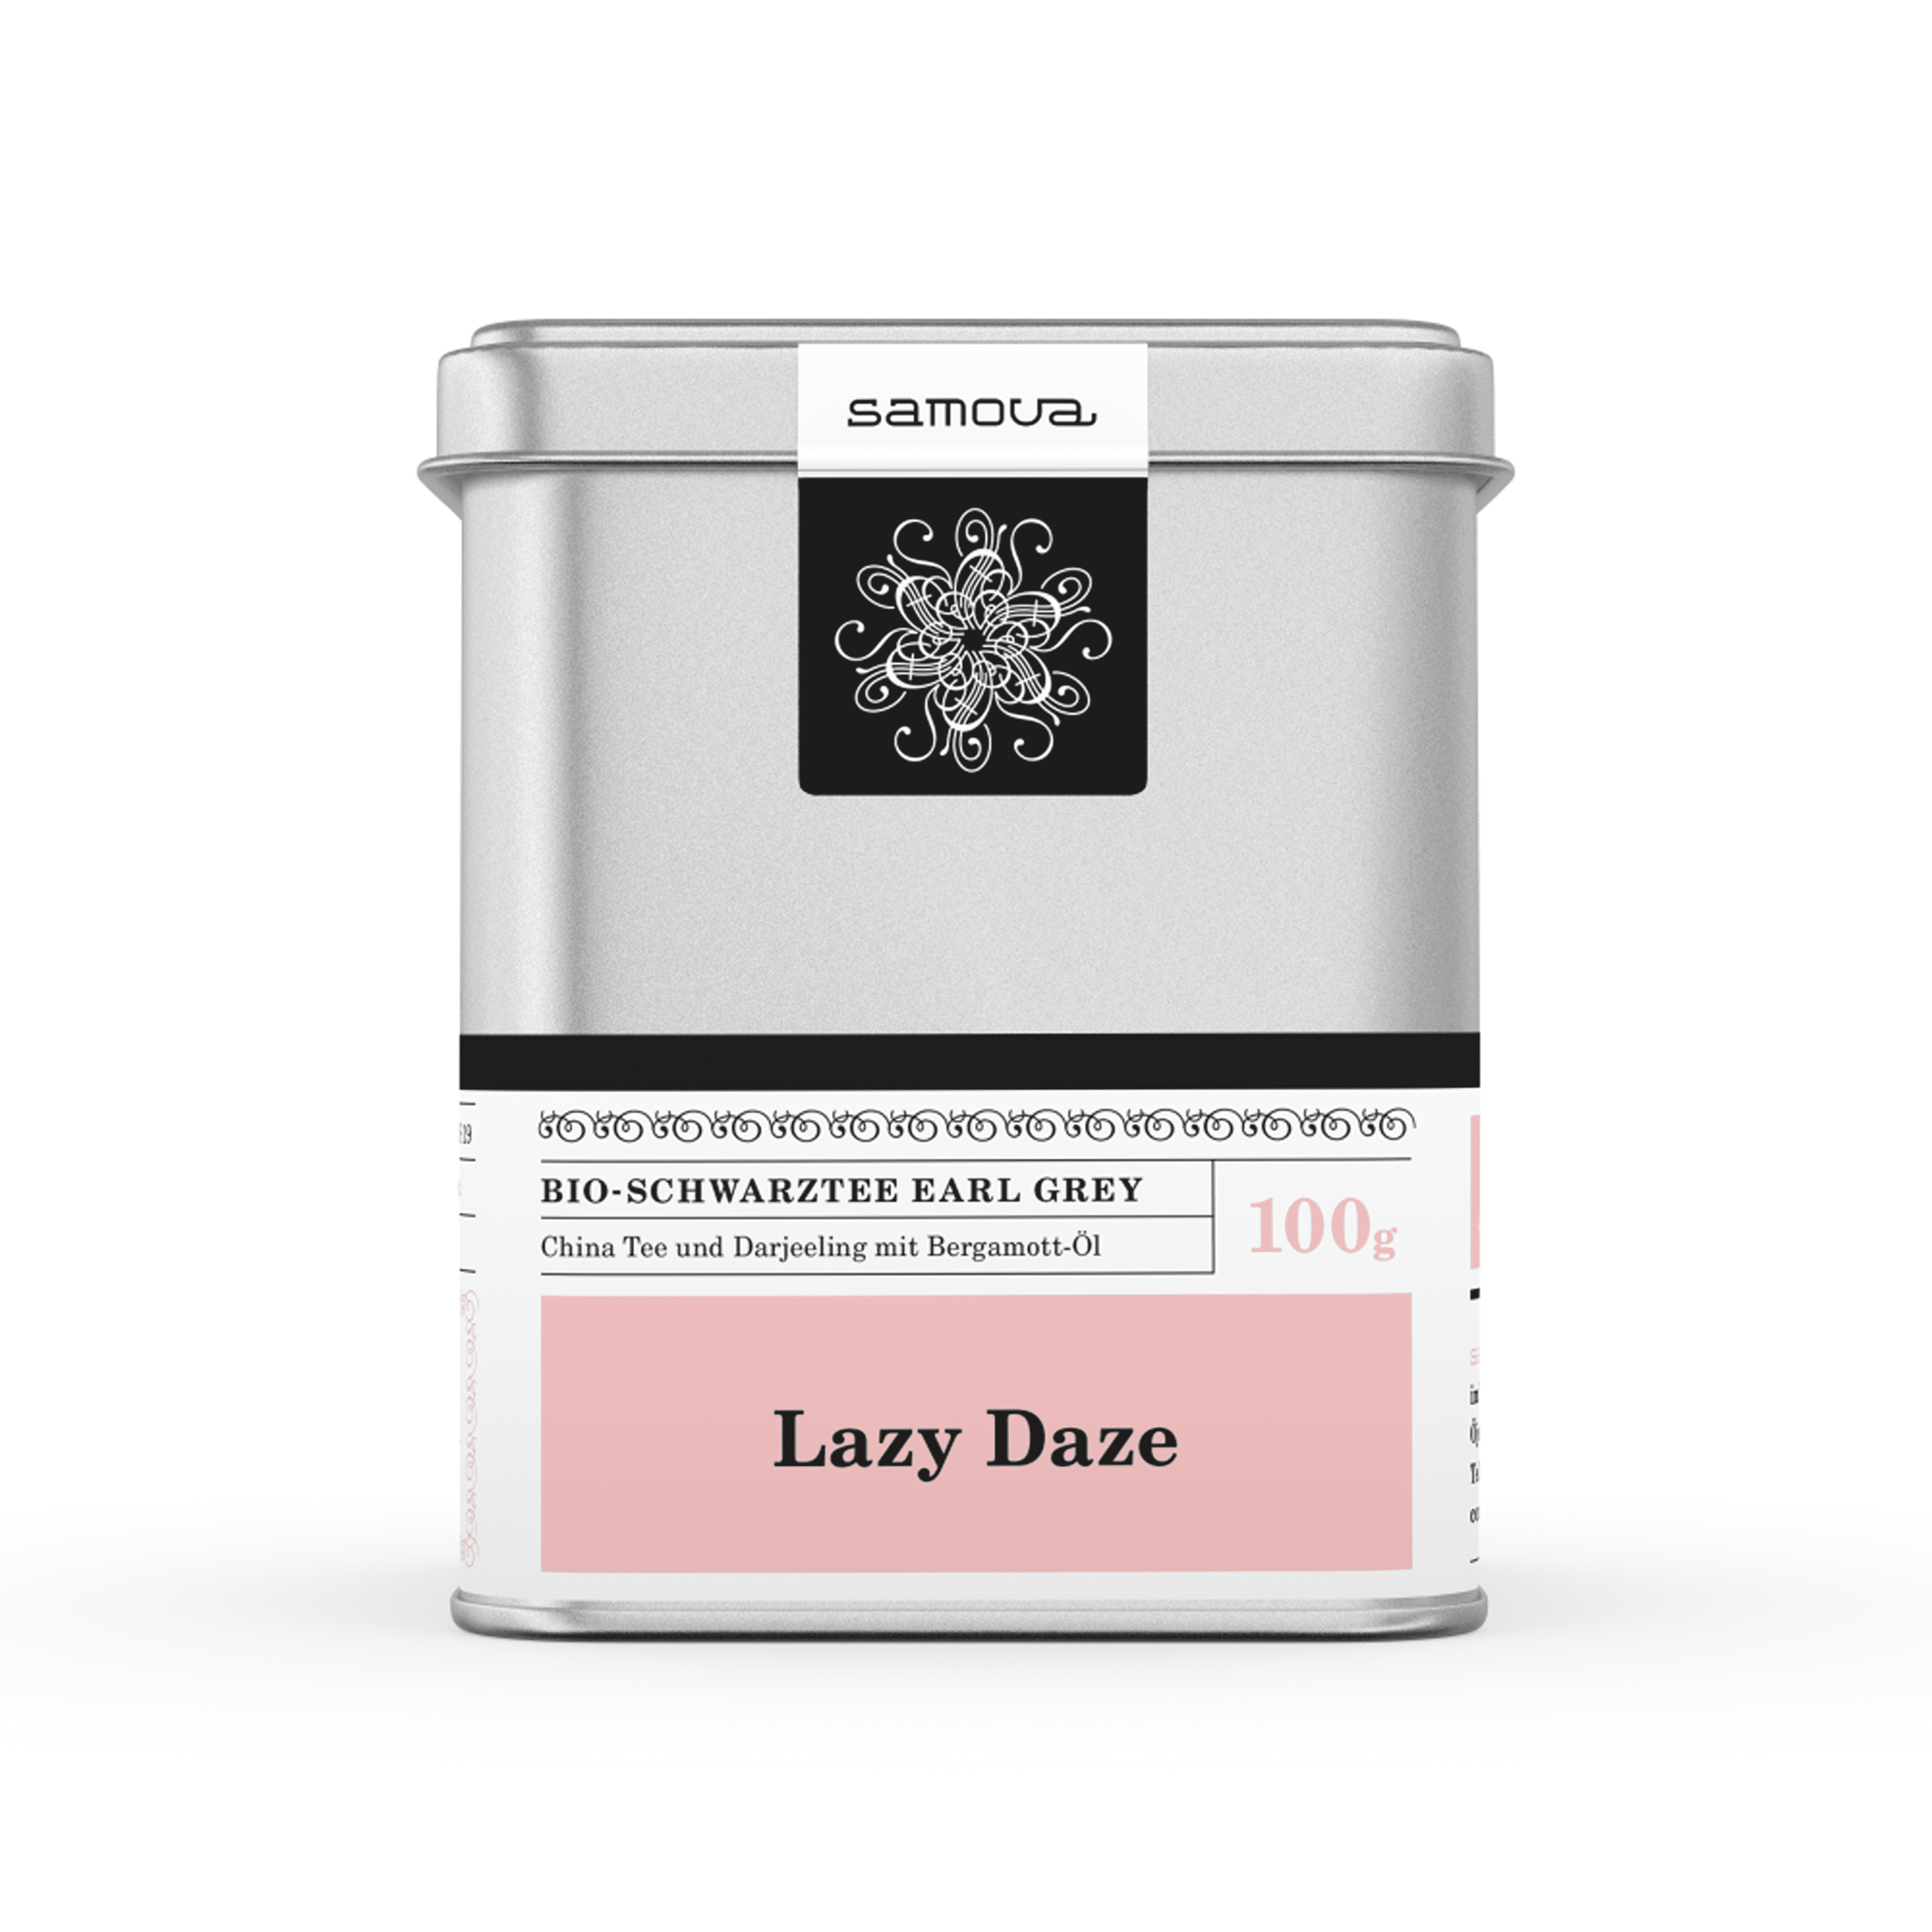 Can of Lazy Daze tea